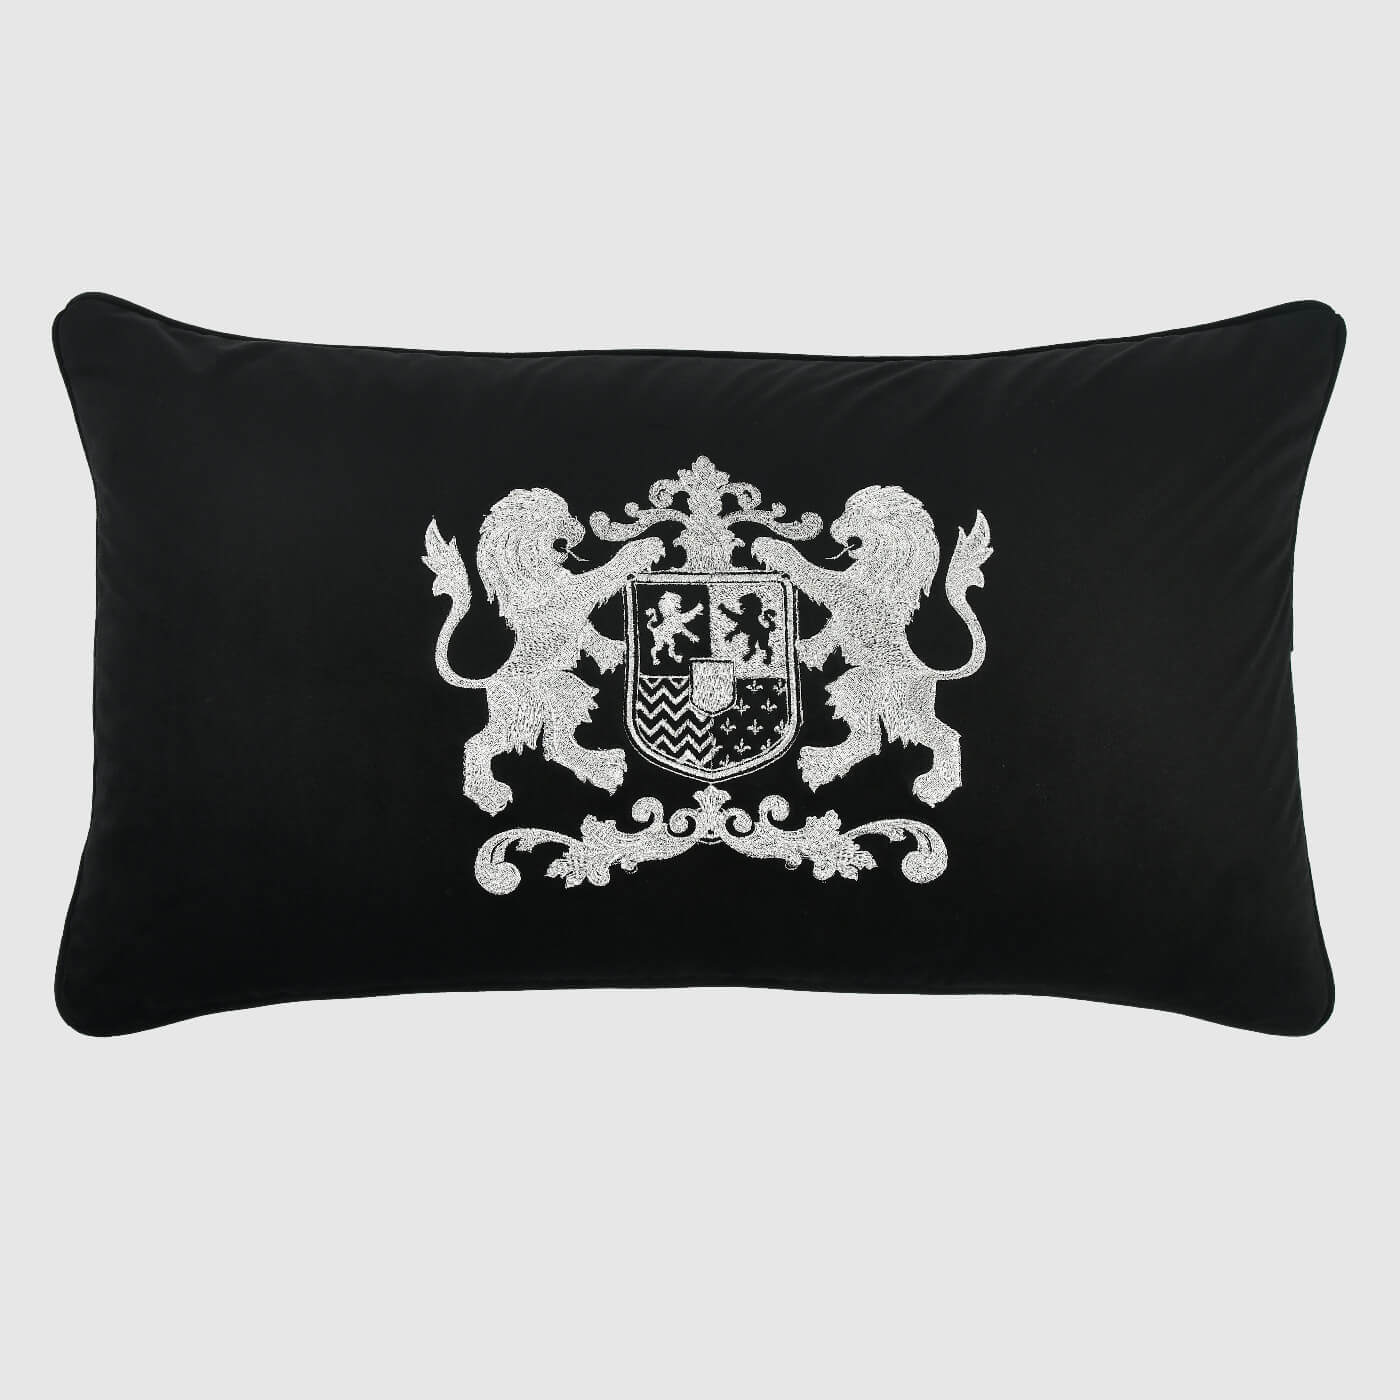 Dynasty Lumbar Pillow Cover , Black - Pillow Covers